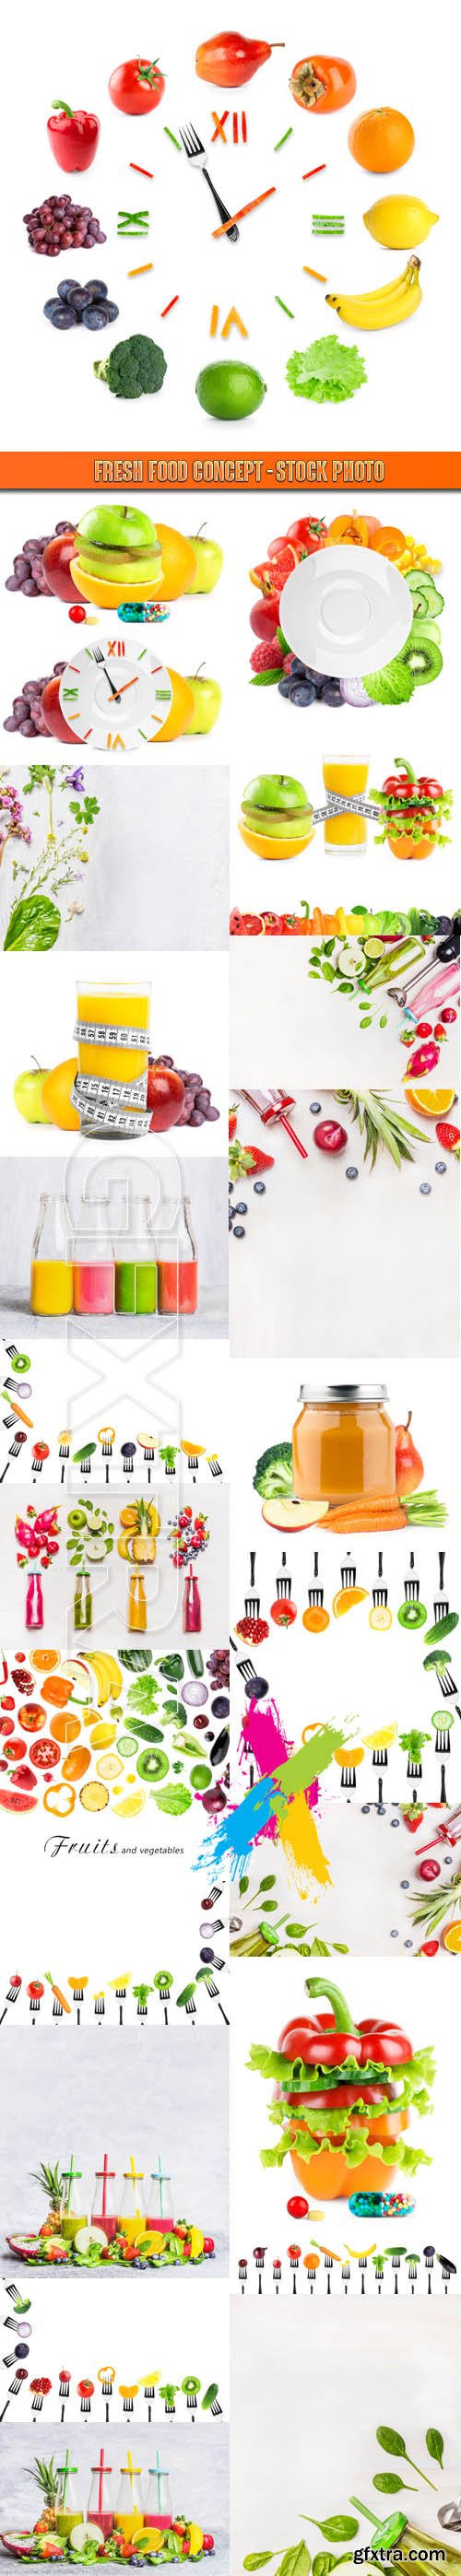 Fresh food concept - Stock Photo